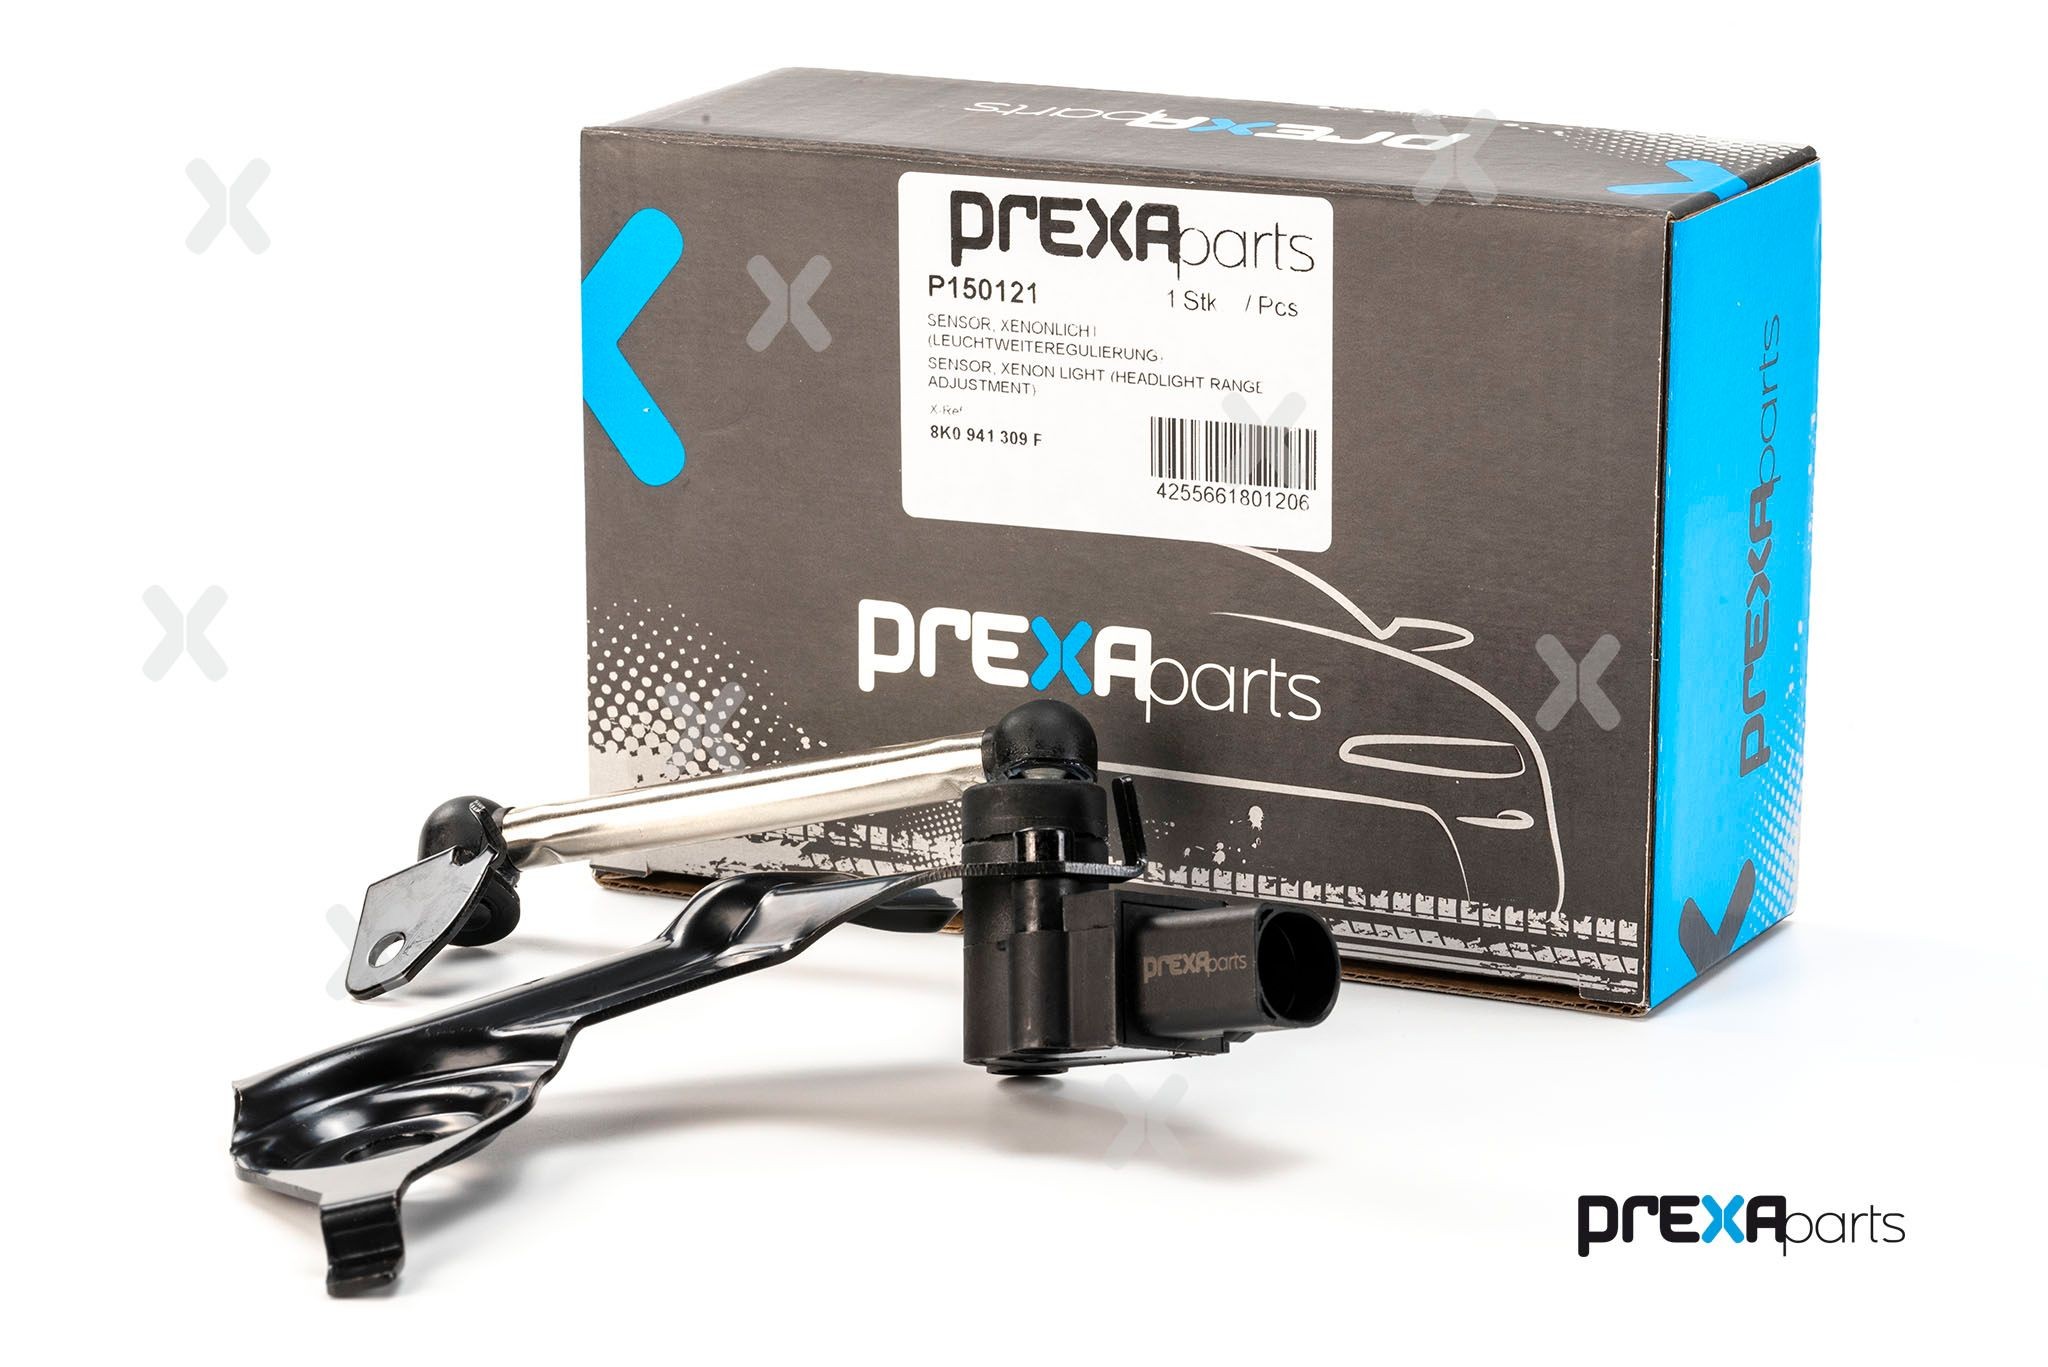 Sensor, Xenon light (headlight range adjustment) P150121 from PREXAparts